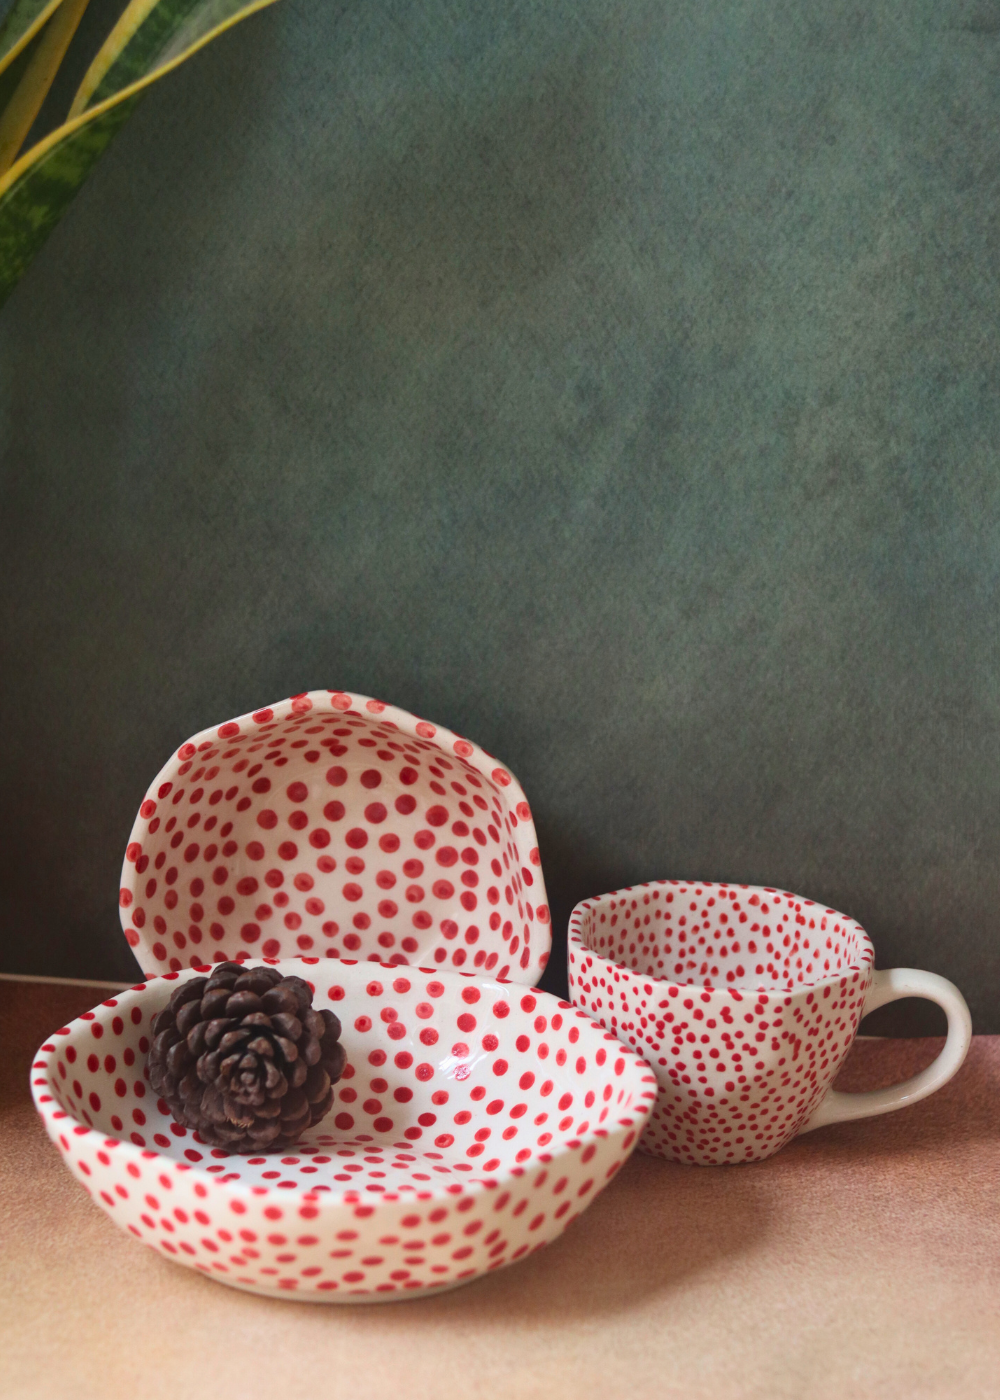 Dinnerware handmade ceramic bowls & mug